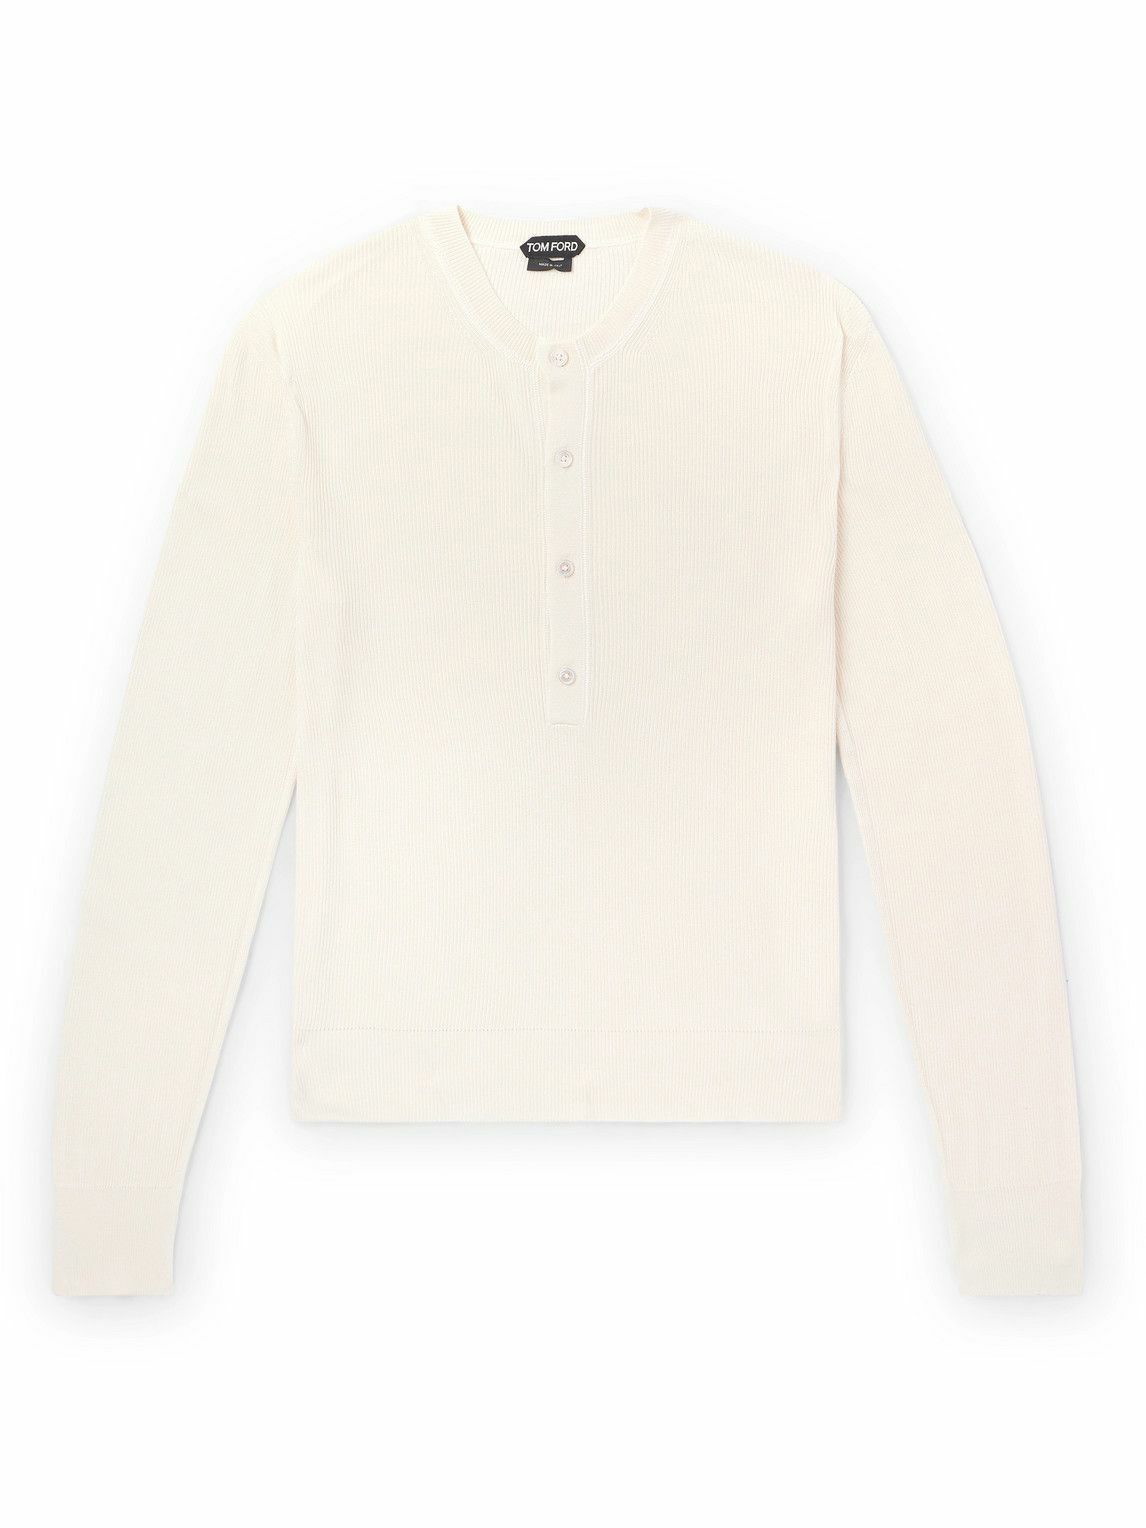 Photo: TOM FORD - Ribbed Silk-Blend Henley Shirt - White